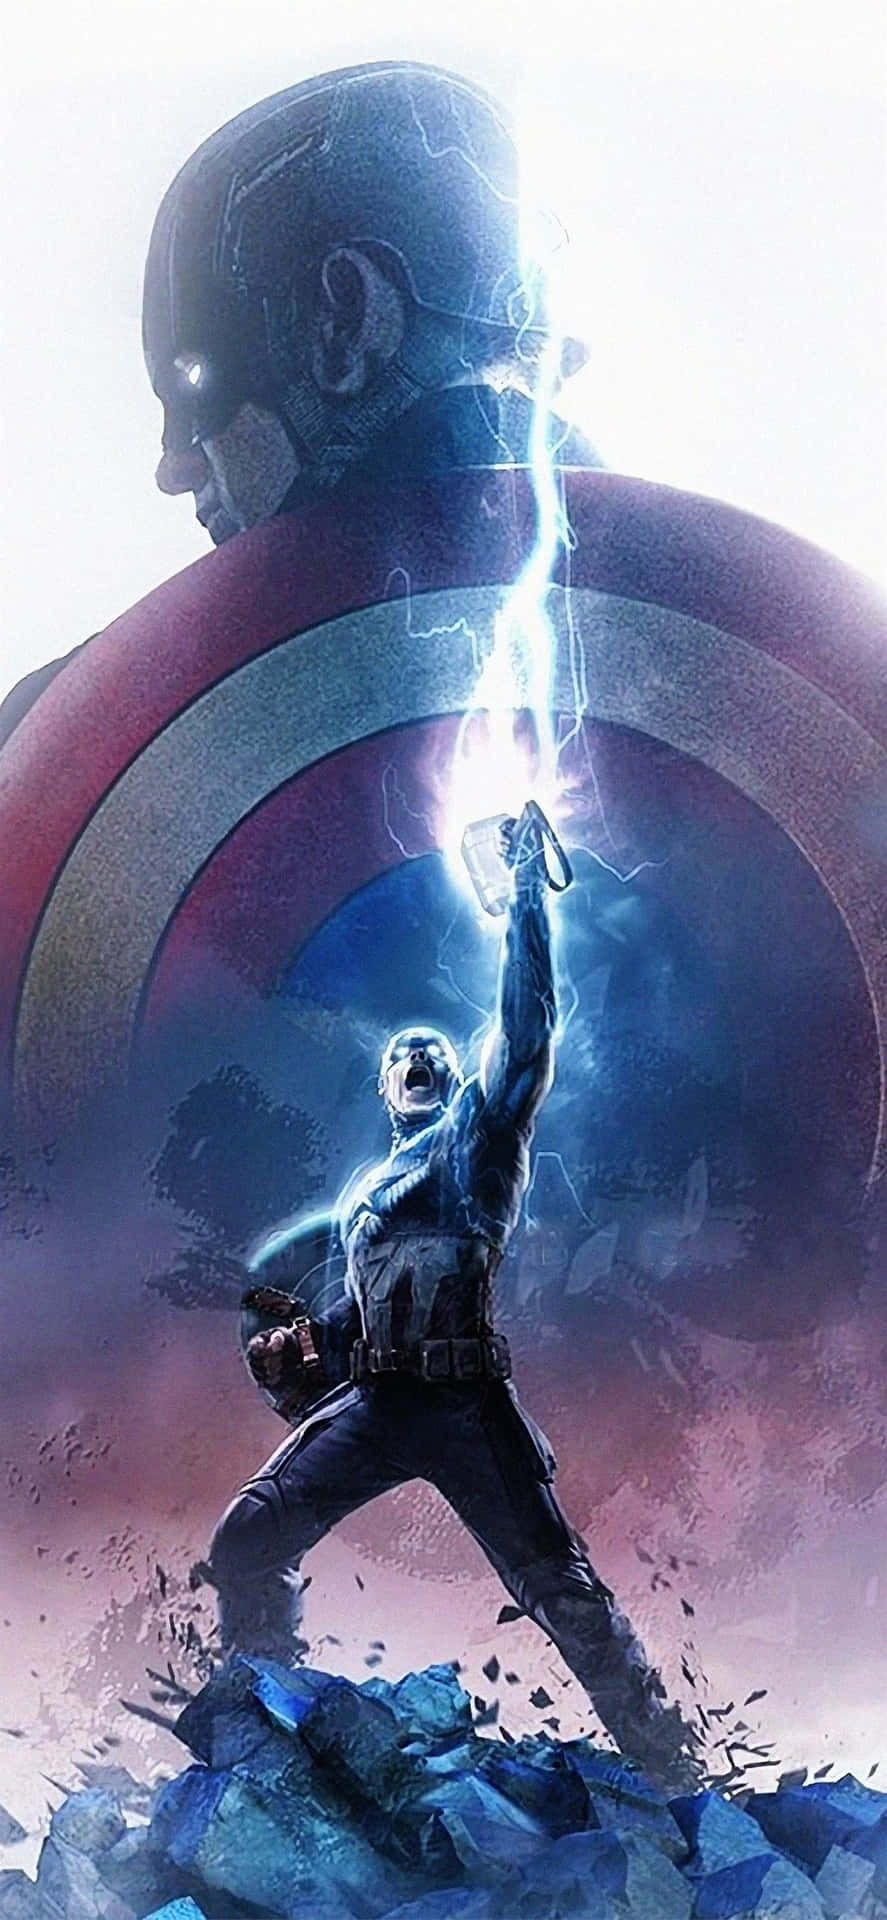 "Be as Cool as Captain America" Wallpaper